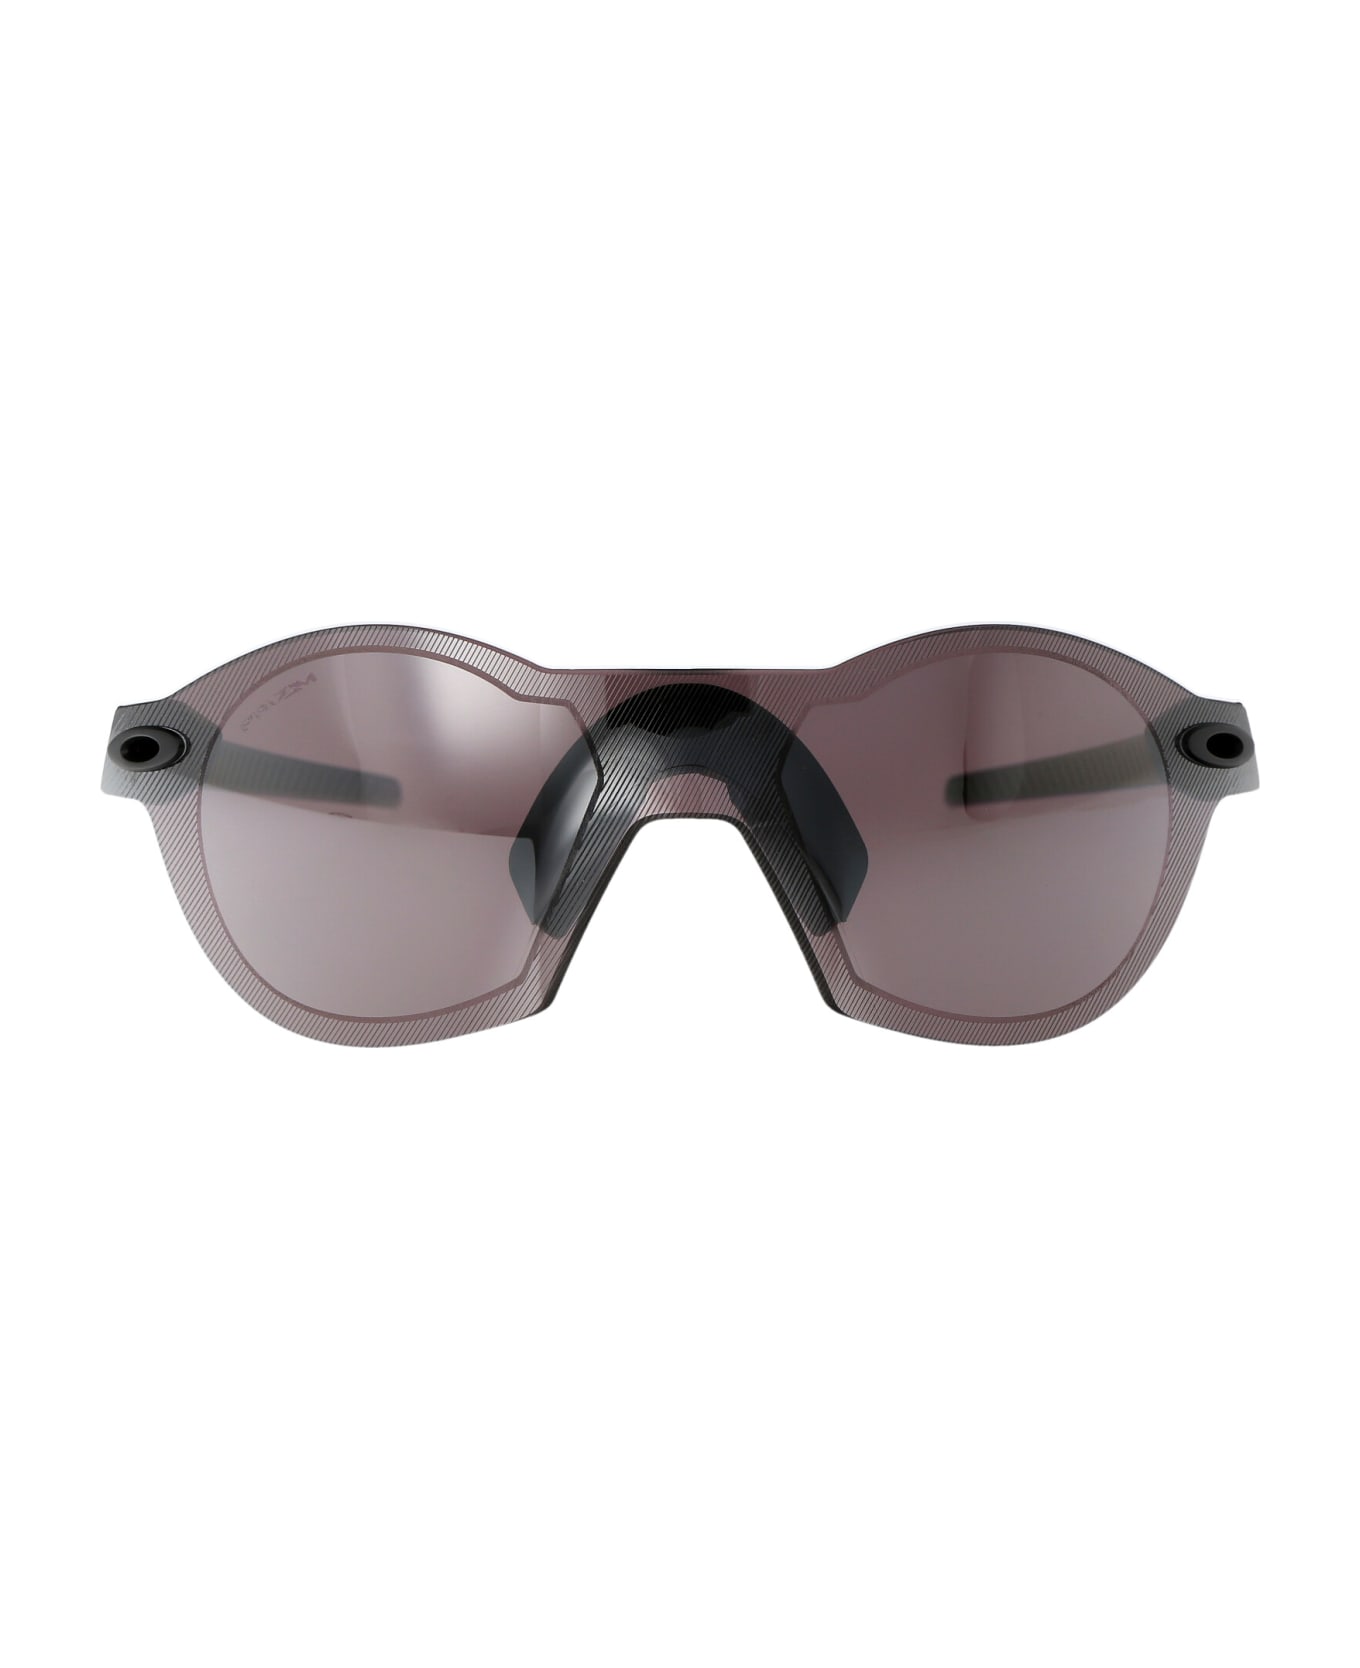 Oakley Re:subzero Sunglasses - 909814 Dark Galaxy サングラス